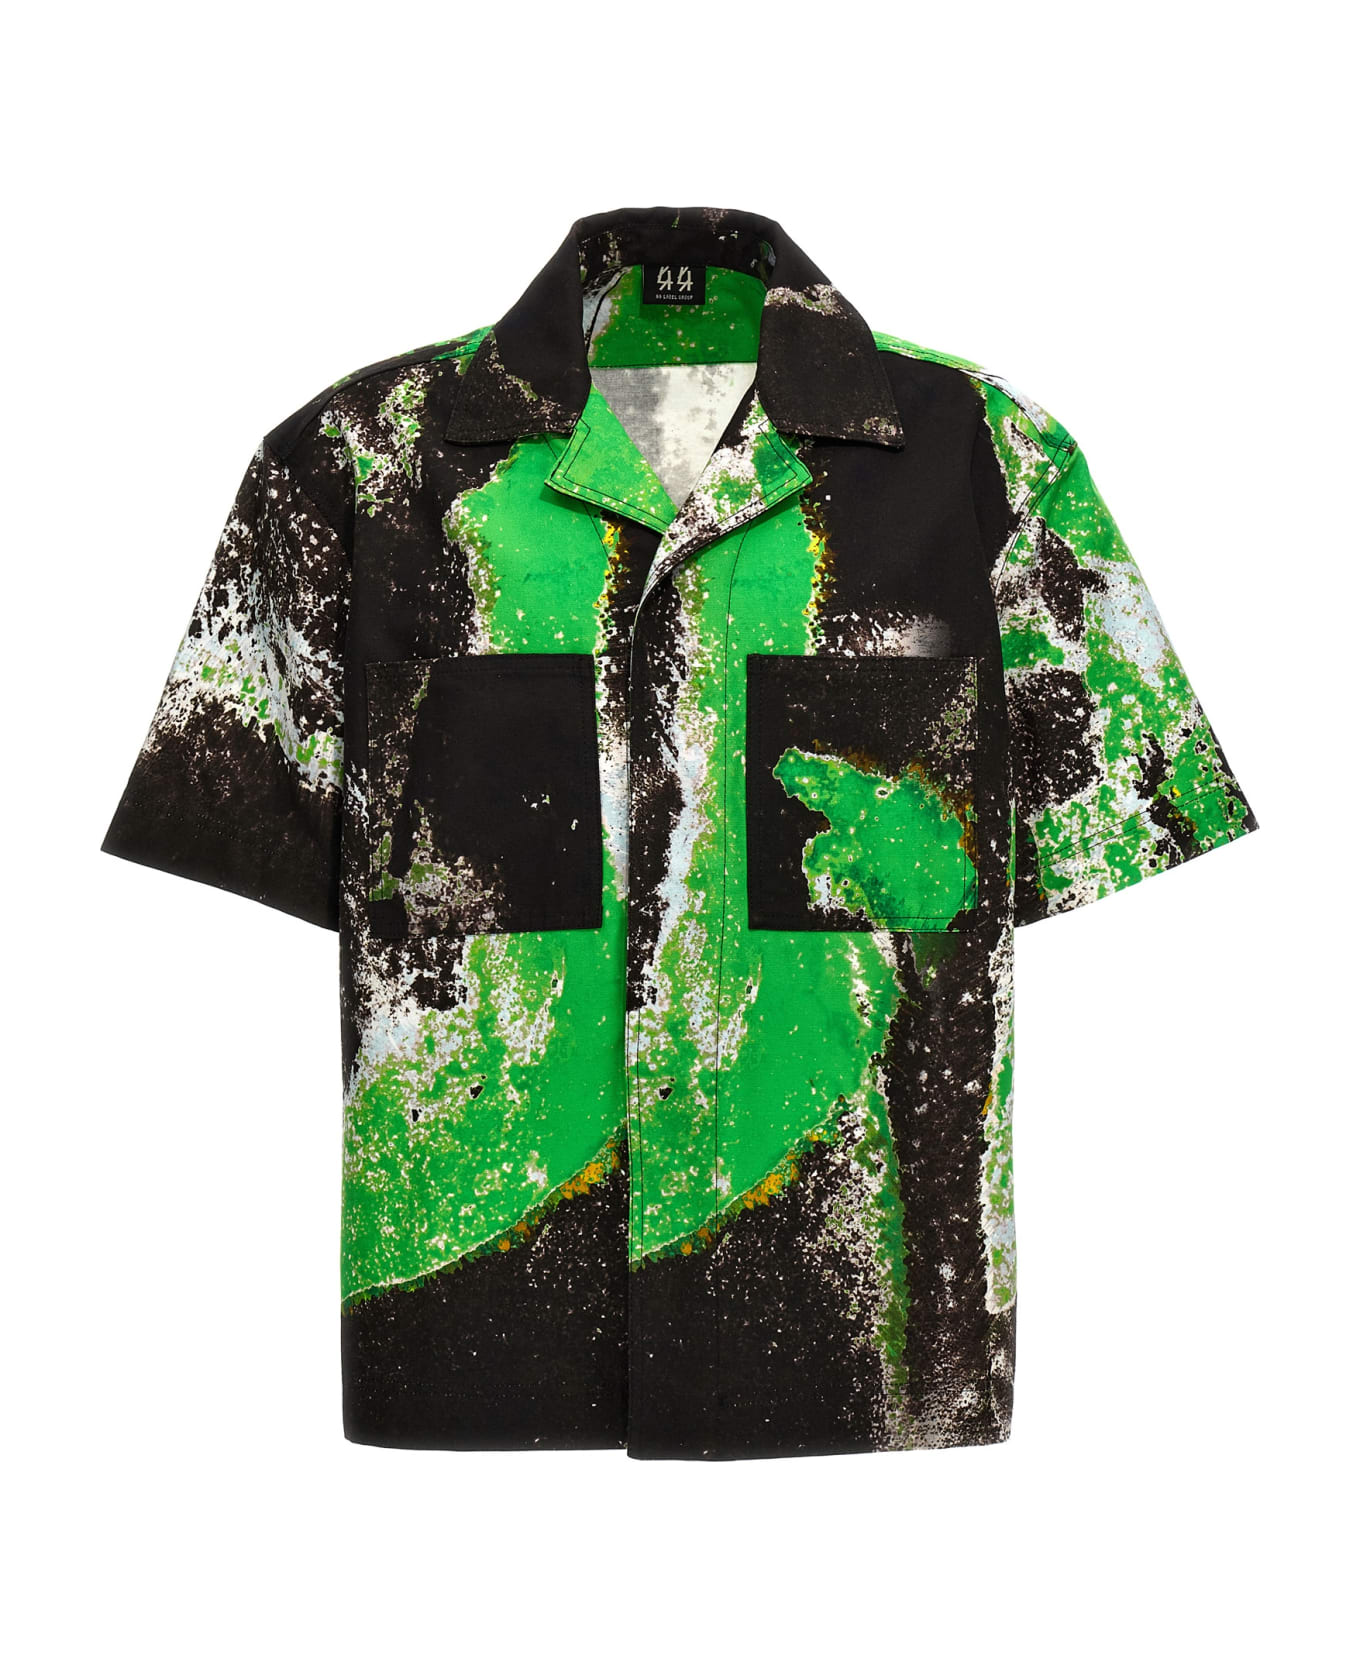 44 Label Group 'corrosive' Shirt - Multicolor